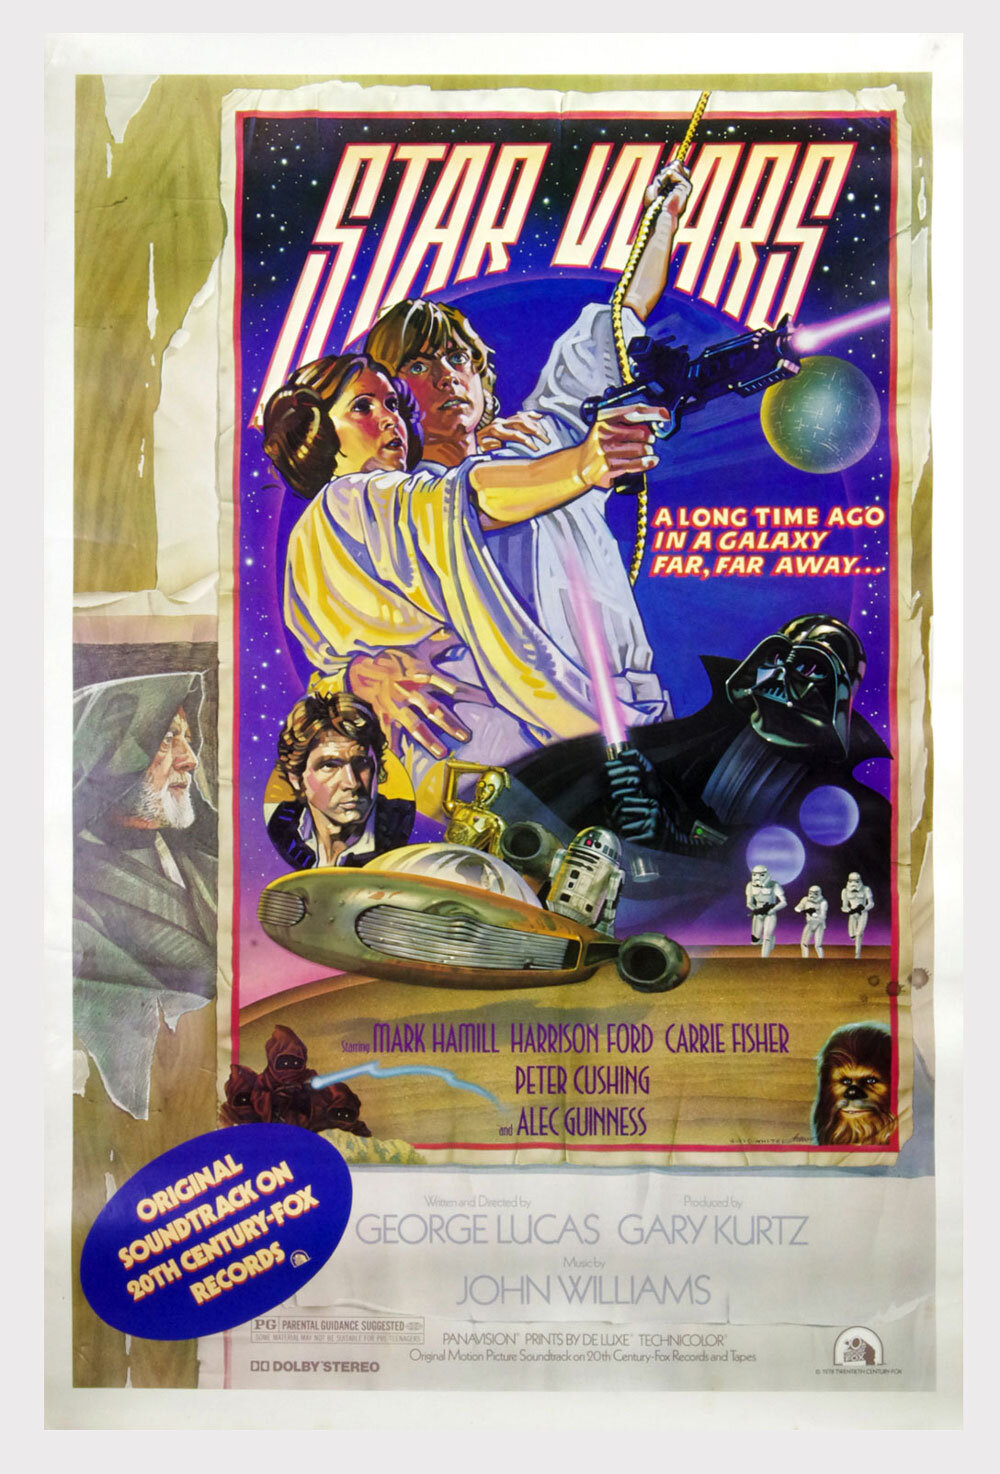 Star Wars Poster A New Hope 1978 Original Movie Soundtrack Album Promotion